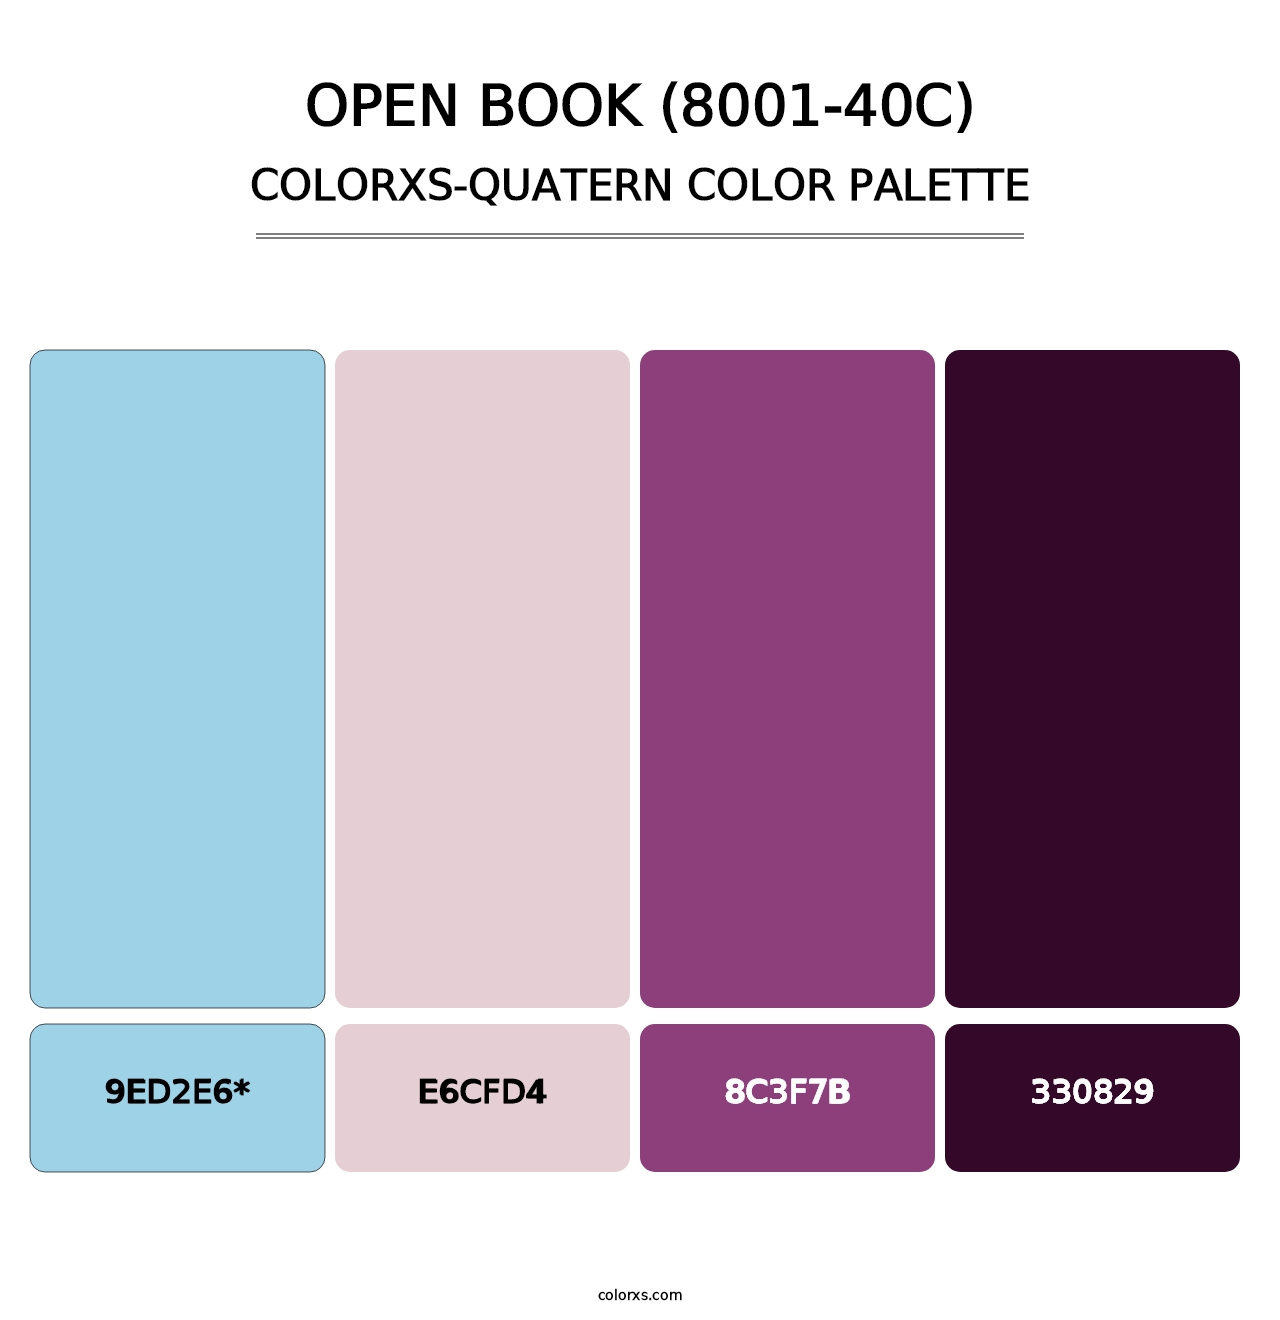 Open Book (8001-40C) - Colorxs Quatern Palette